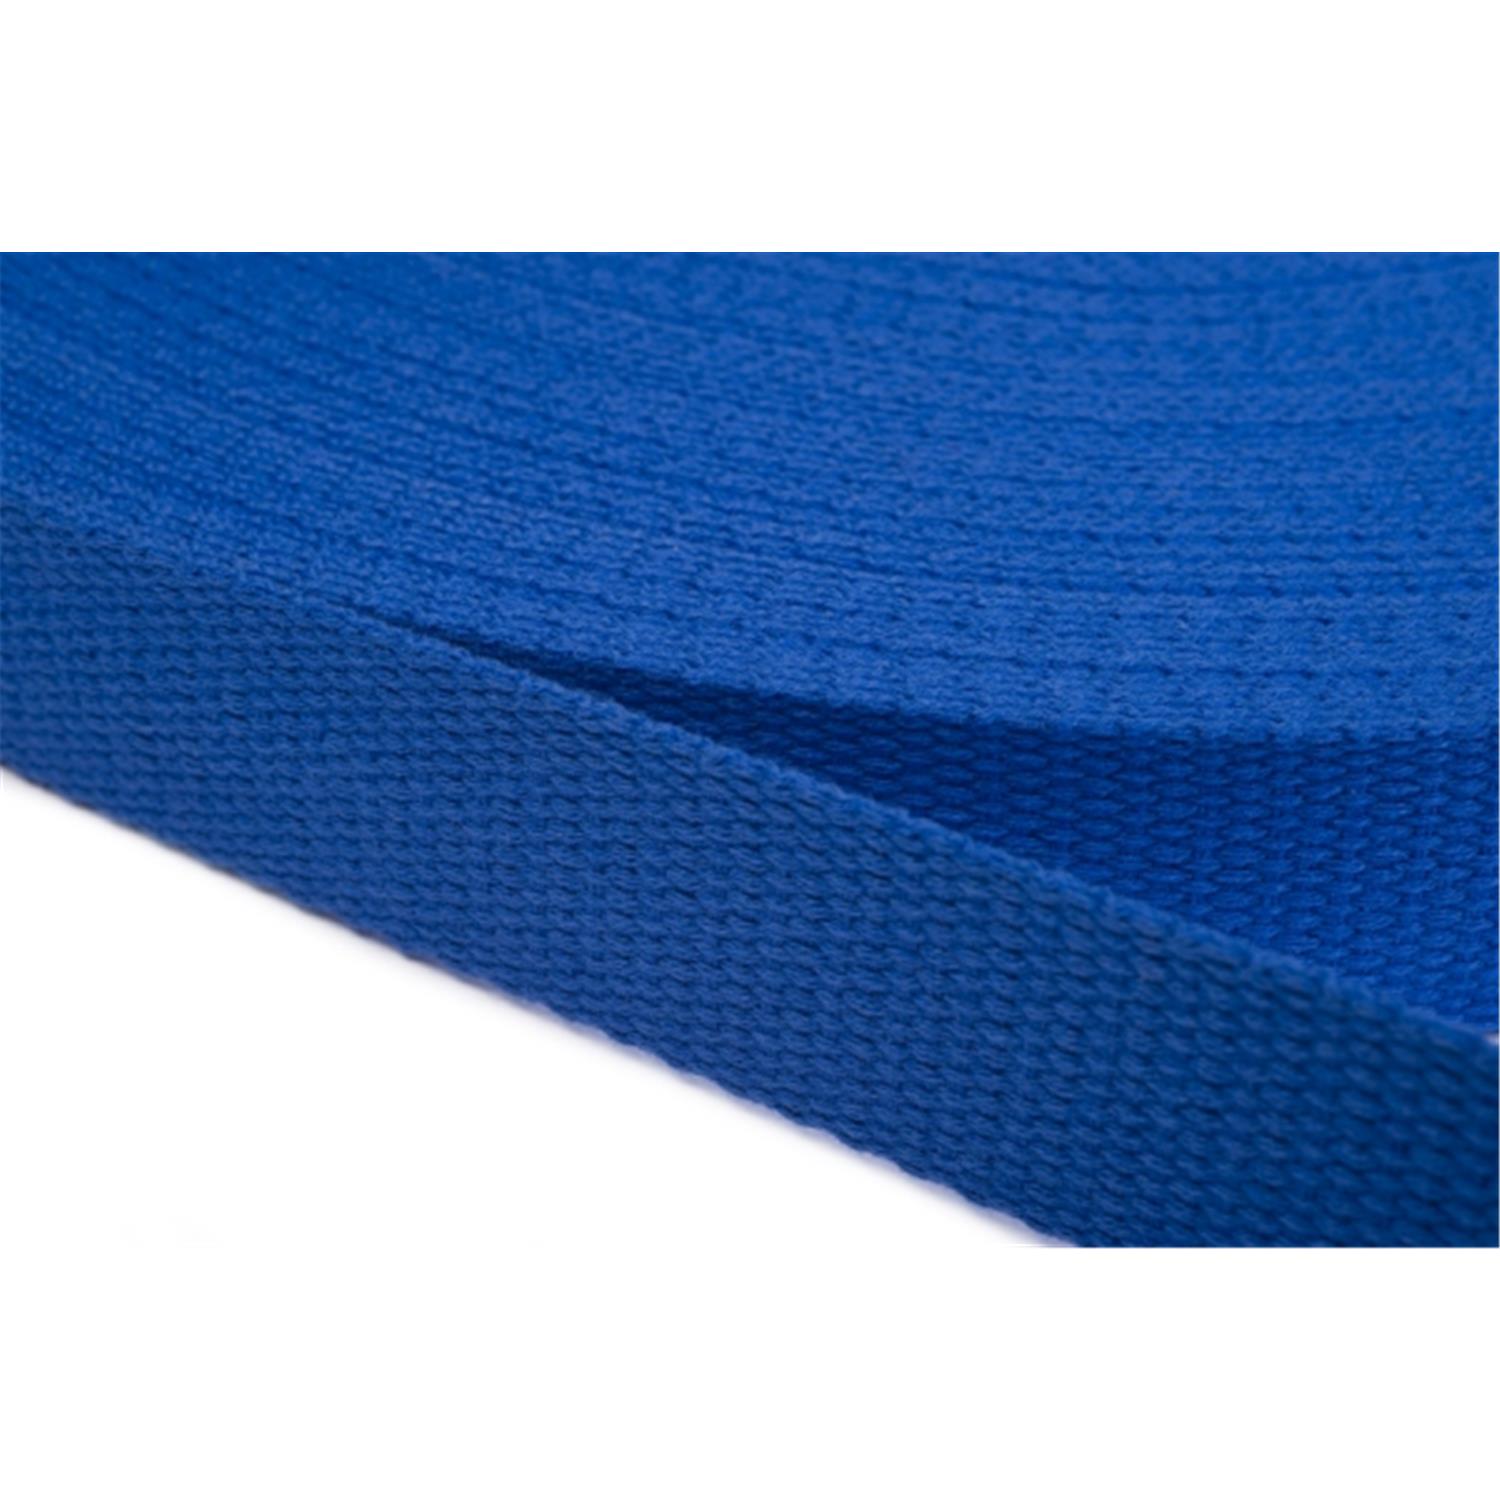 Gurtband aus Baumwolle 30mm in 20 Farben 12 - royalblau 6 Meter